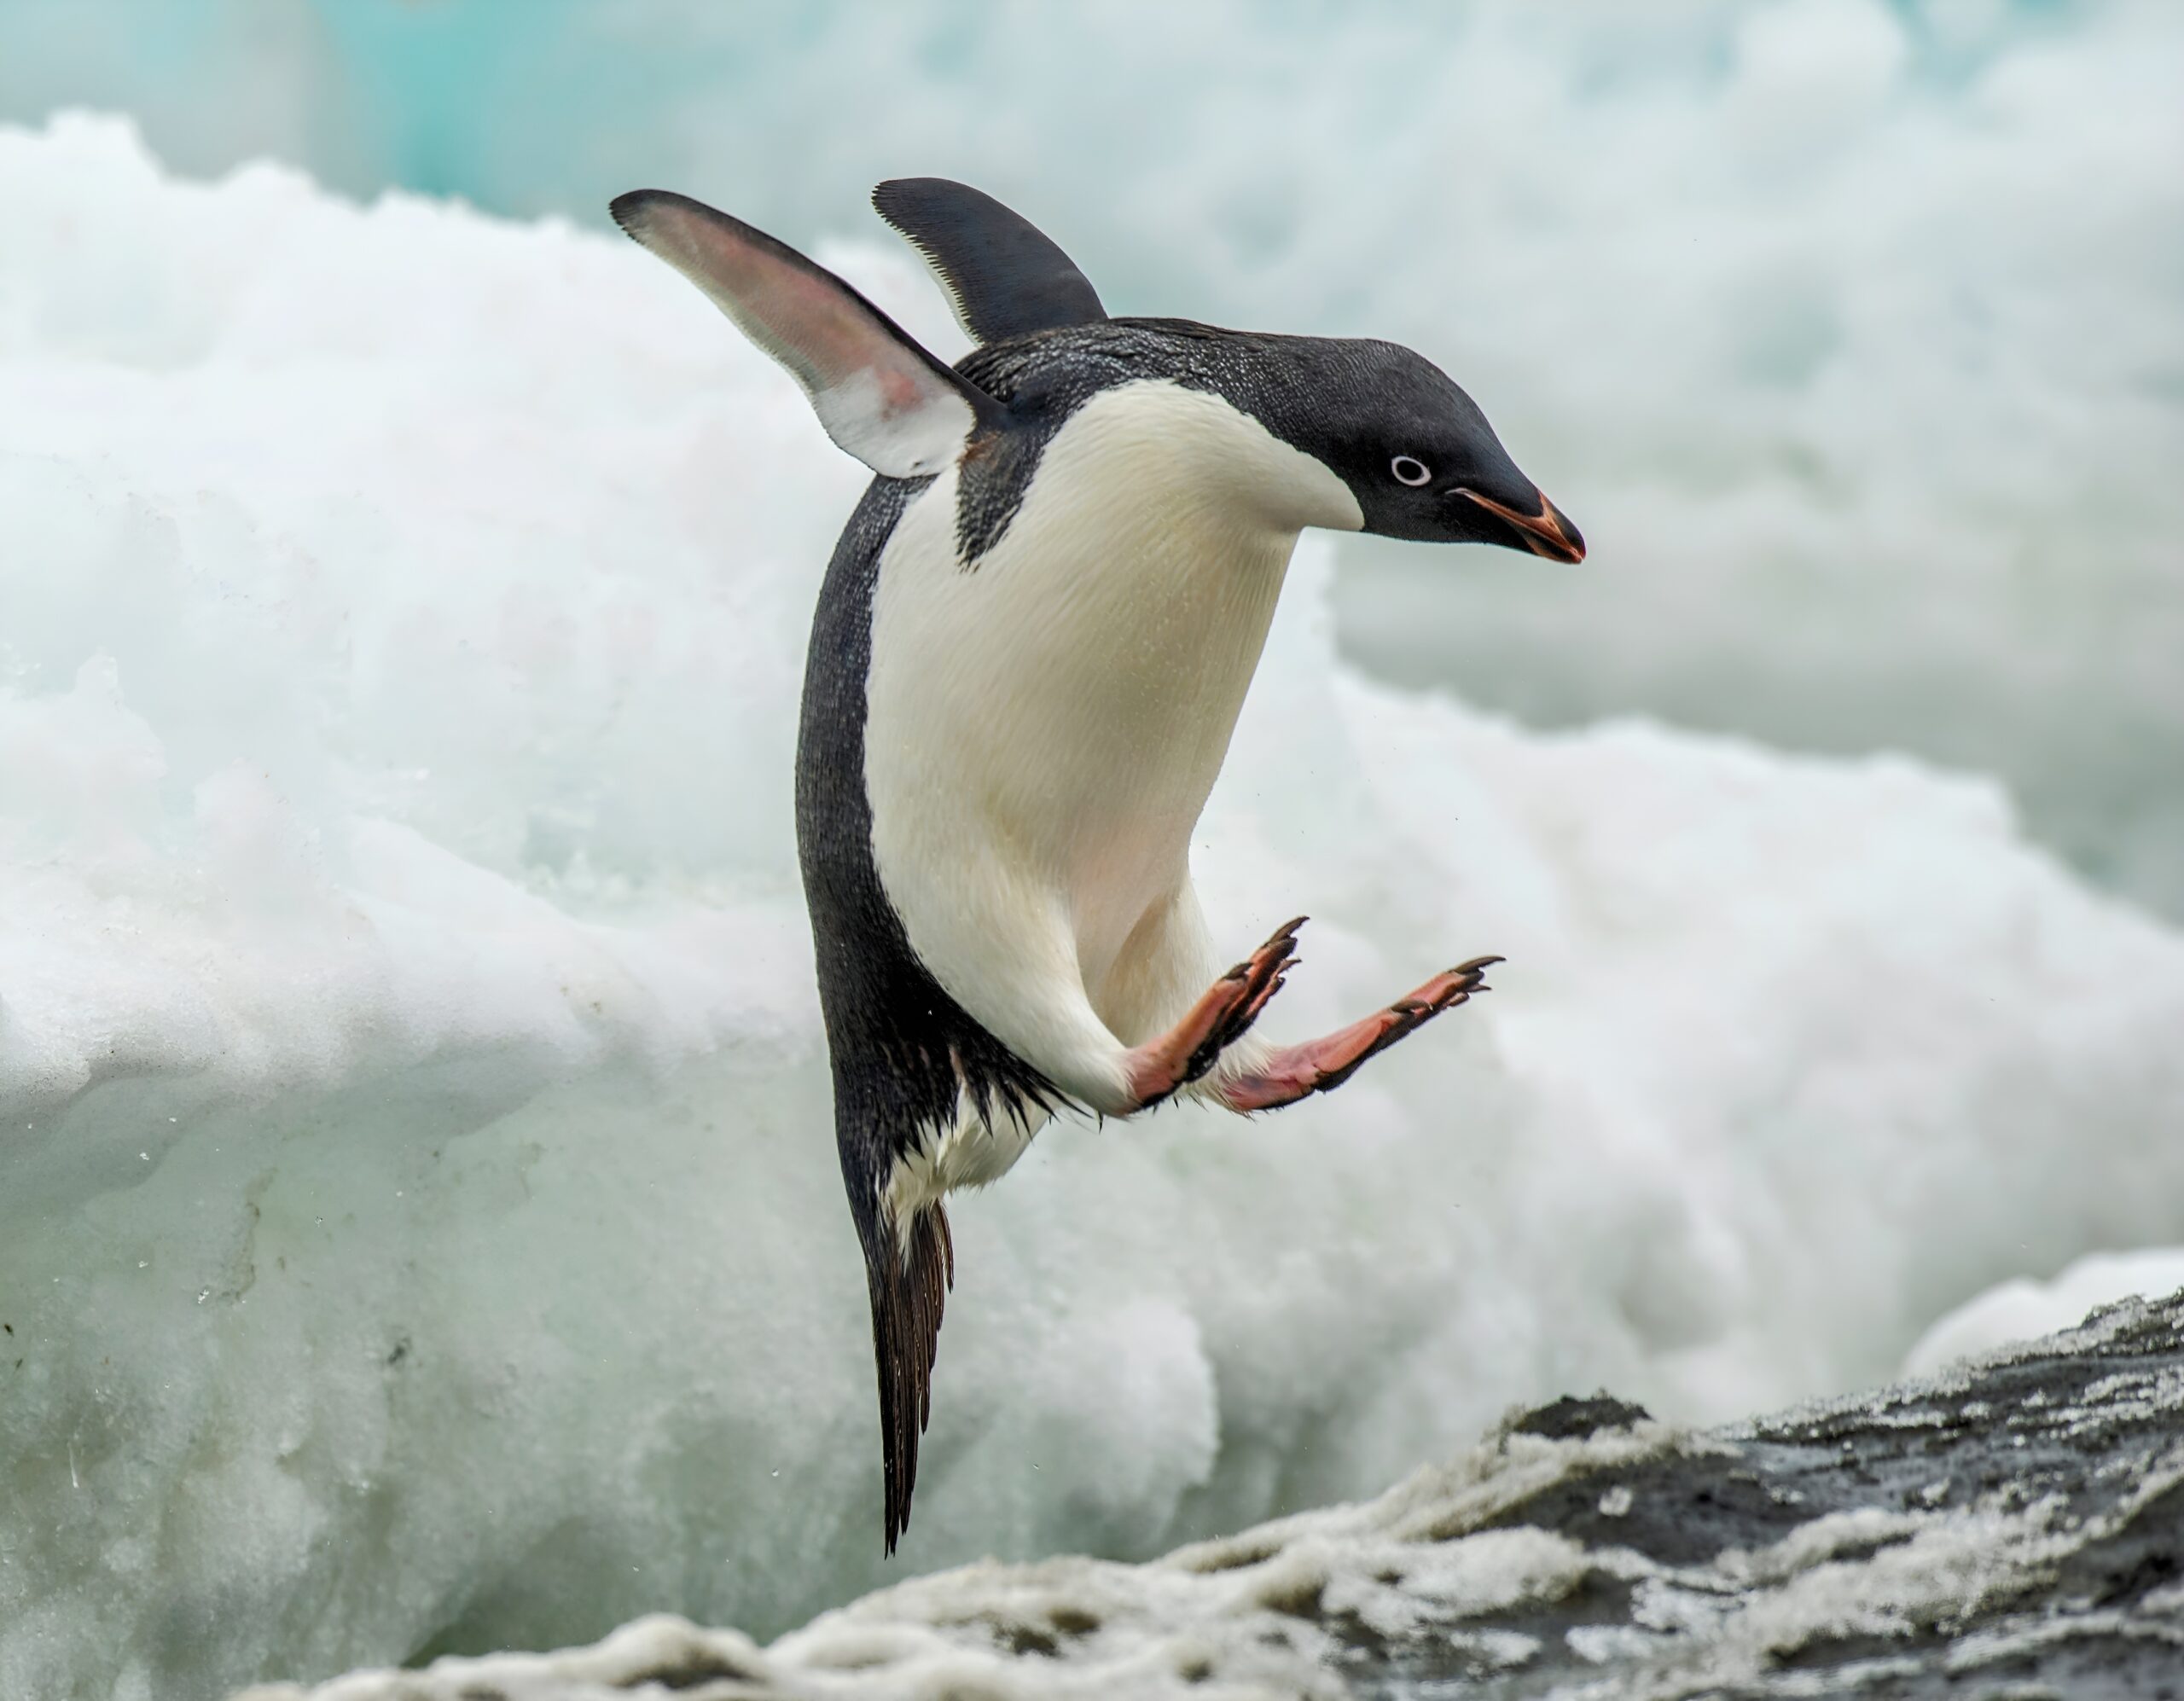 Melting sea ice has a direct impact on Adélie penguin survival • Earth.com